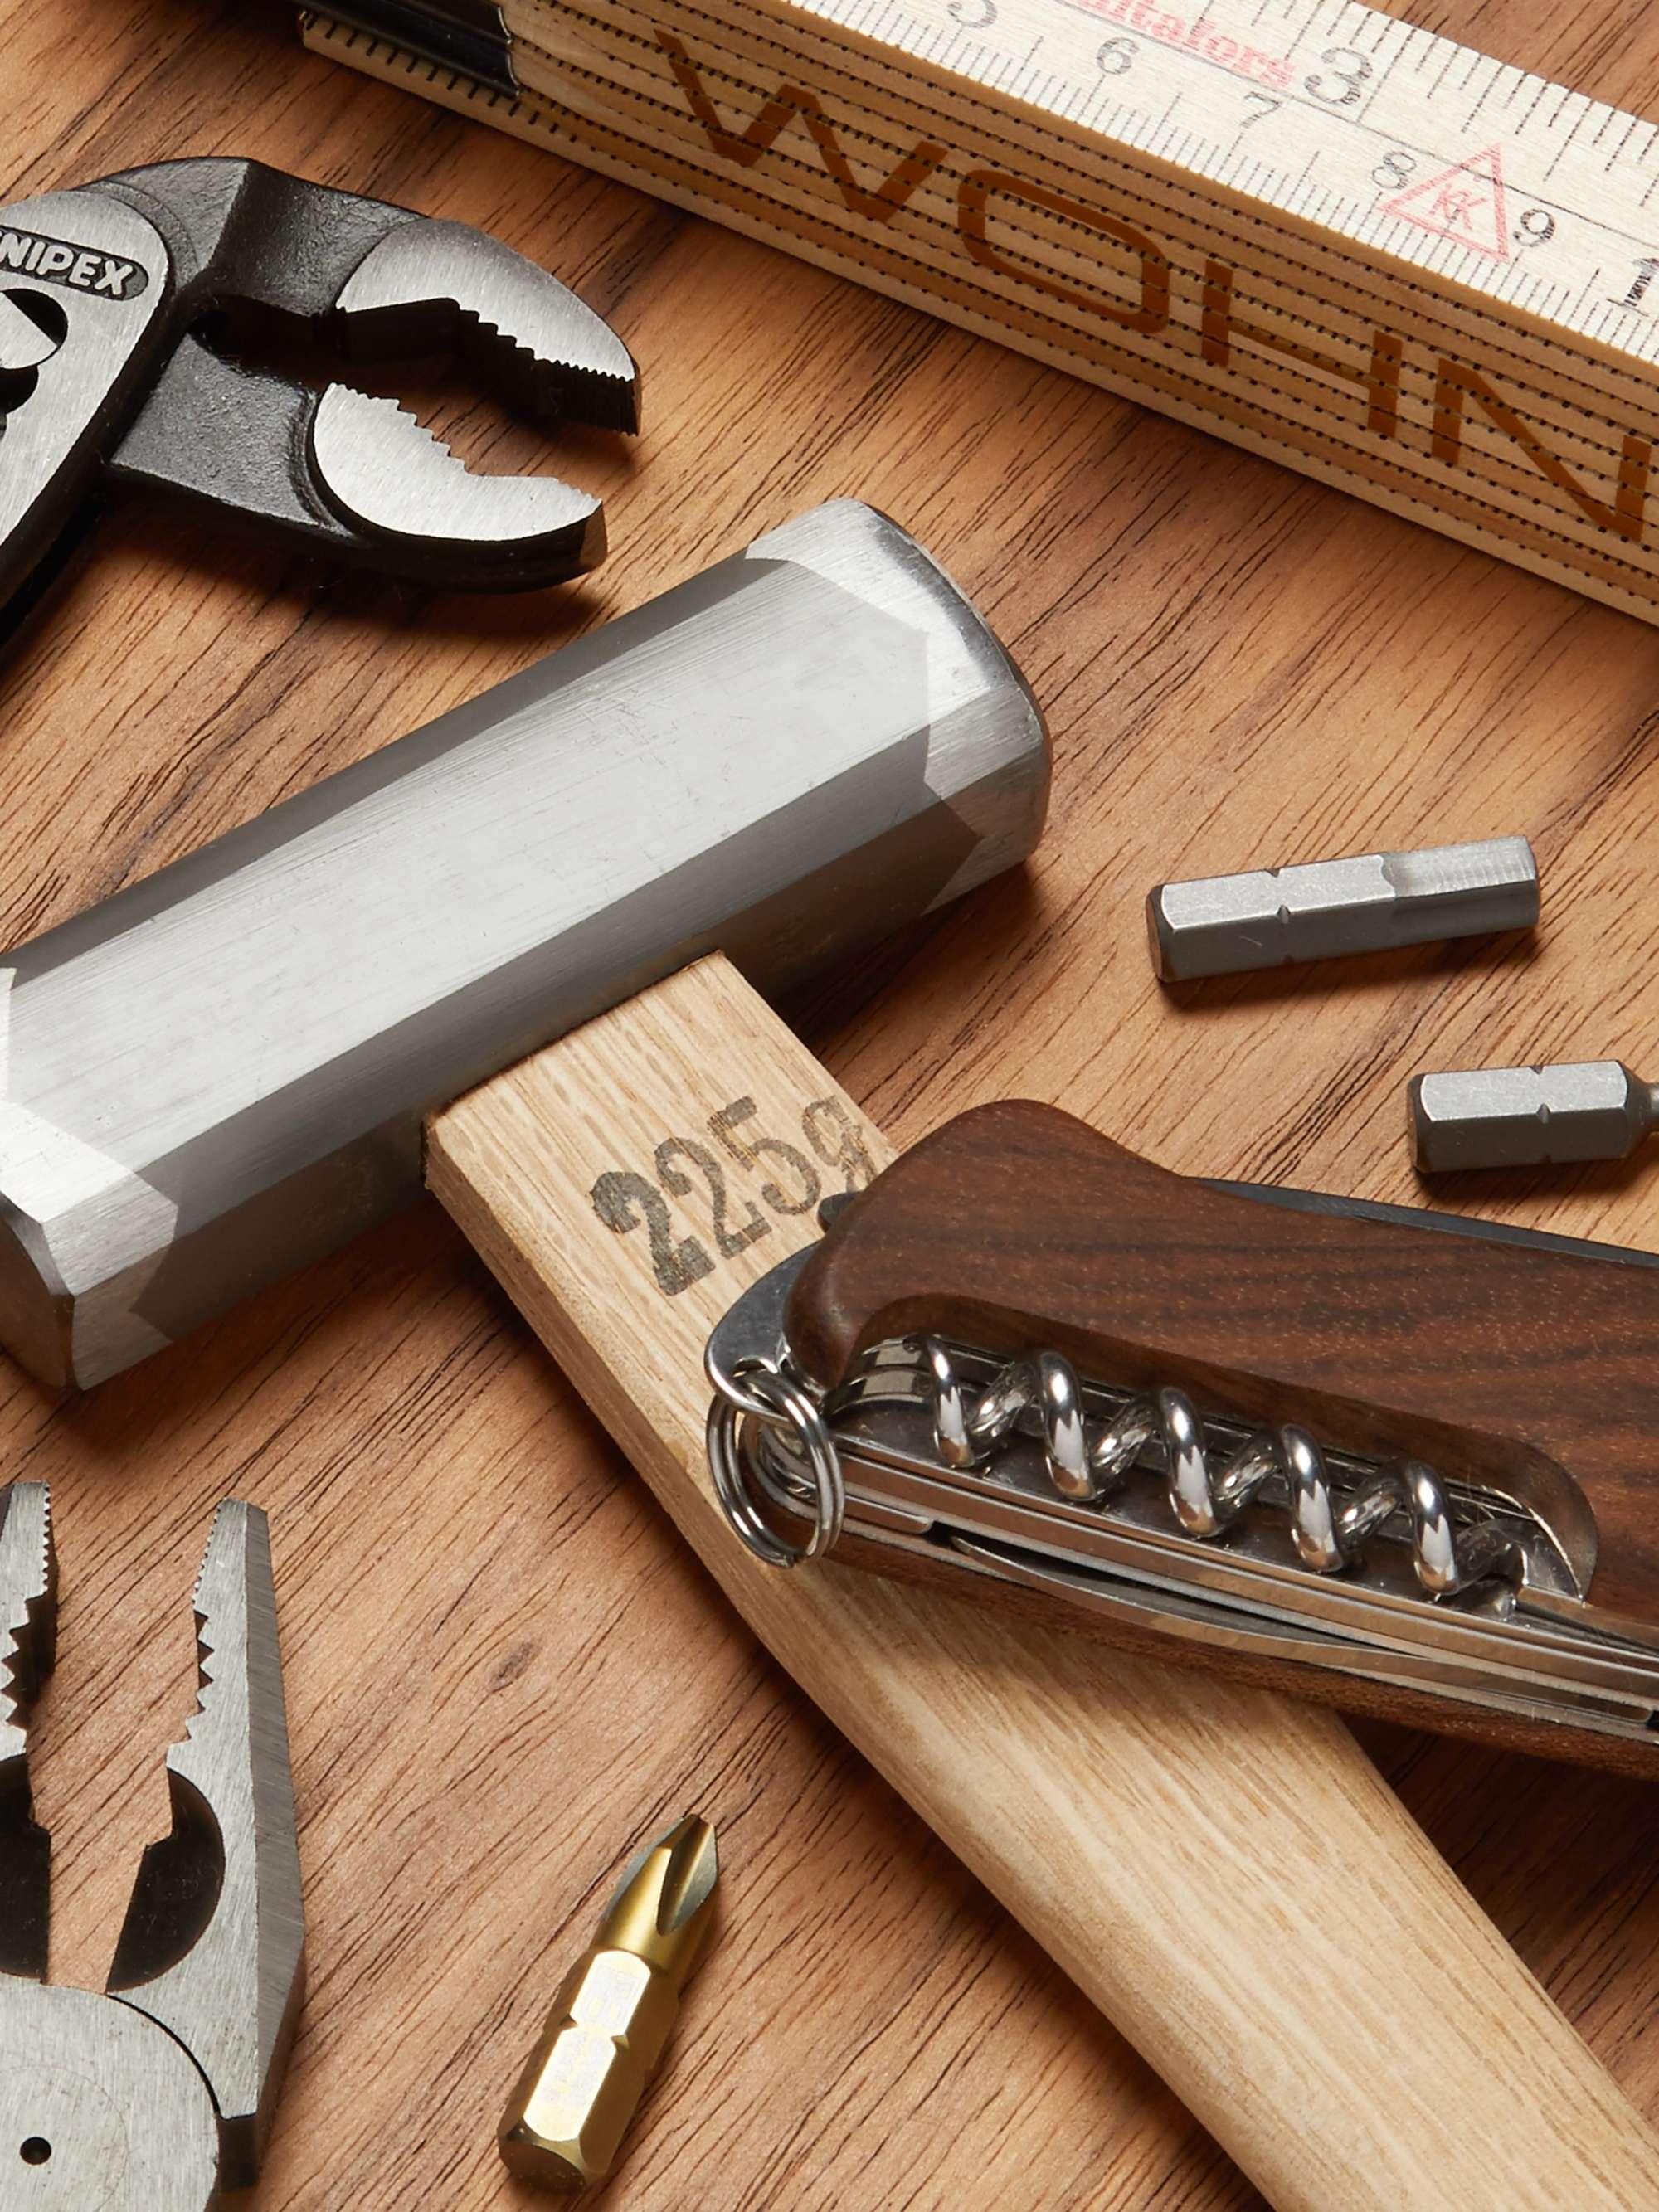 WOHNGEIST 7-Piece Tool Kit In Wood Case